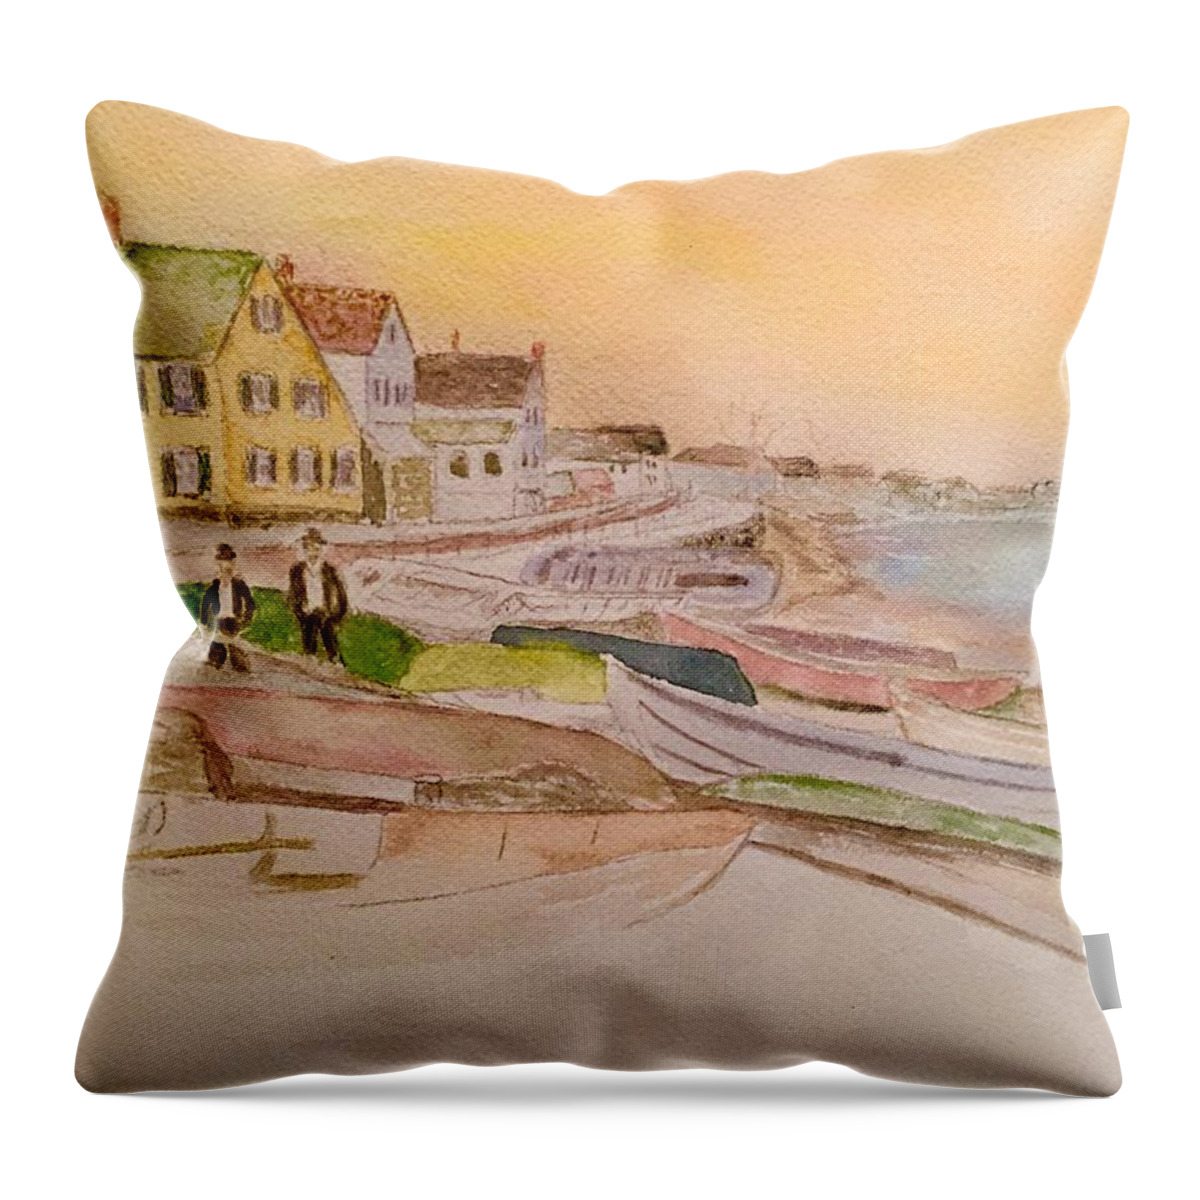 Joppa Flats Throw Pillow featuring the painting Joppa flats Newburyport by Anne Sands